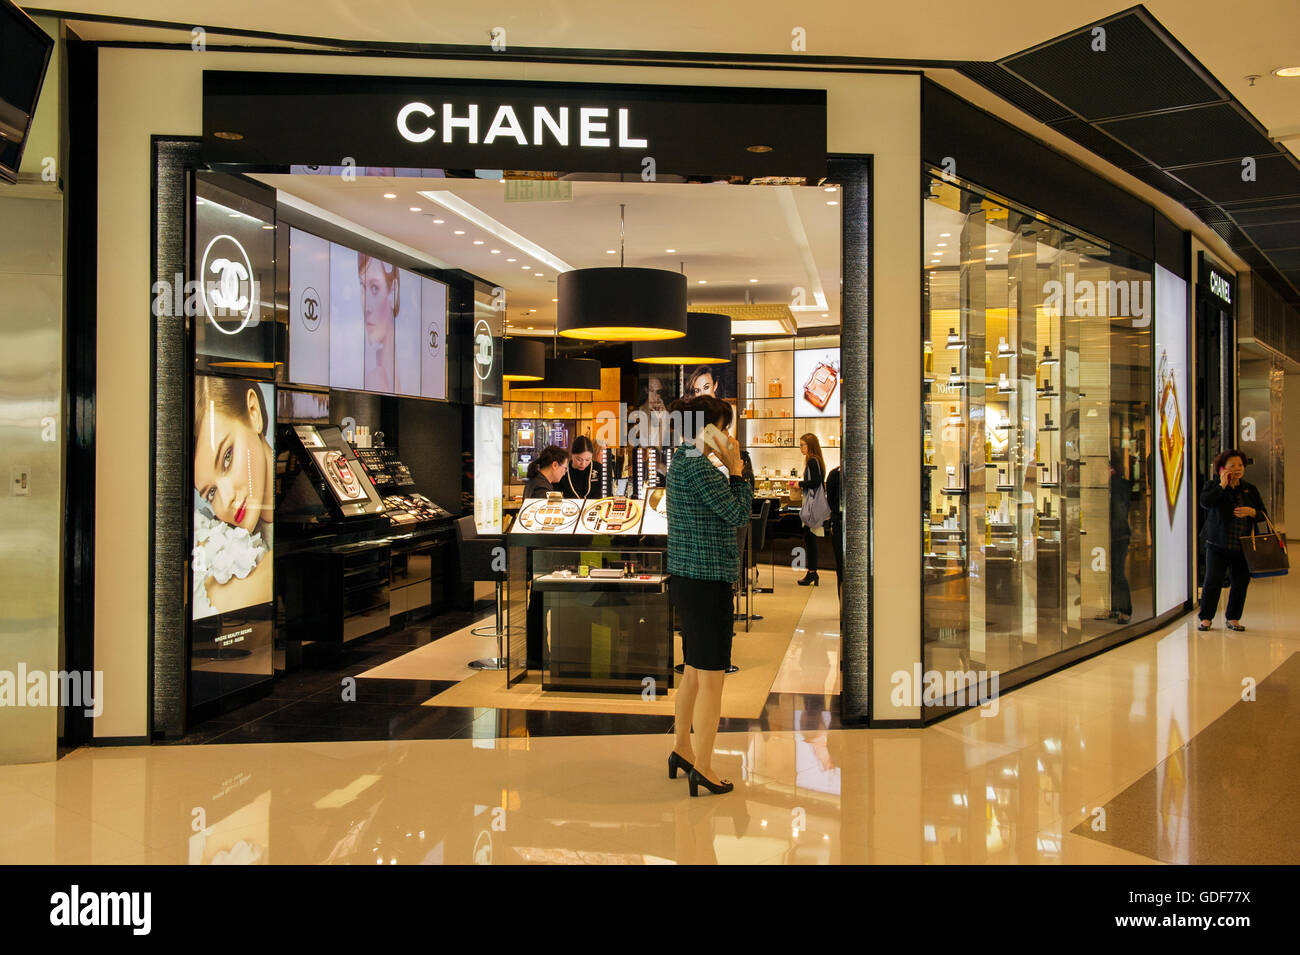 Chanel shop inside IFC, Central Hong Kong, China Stock Photo - Alamy